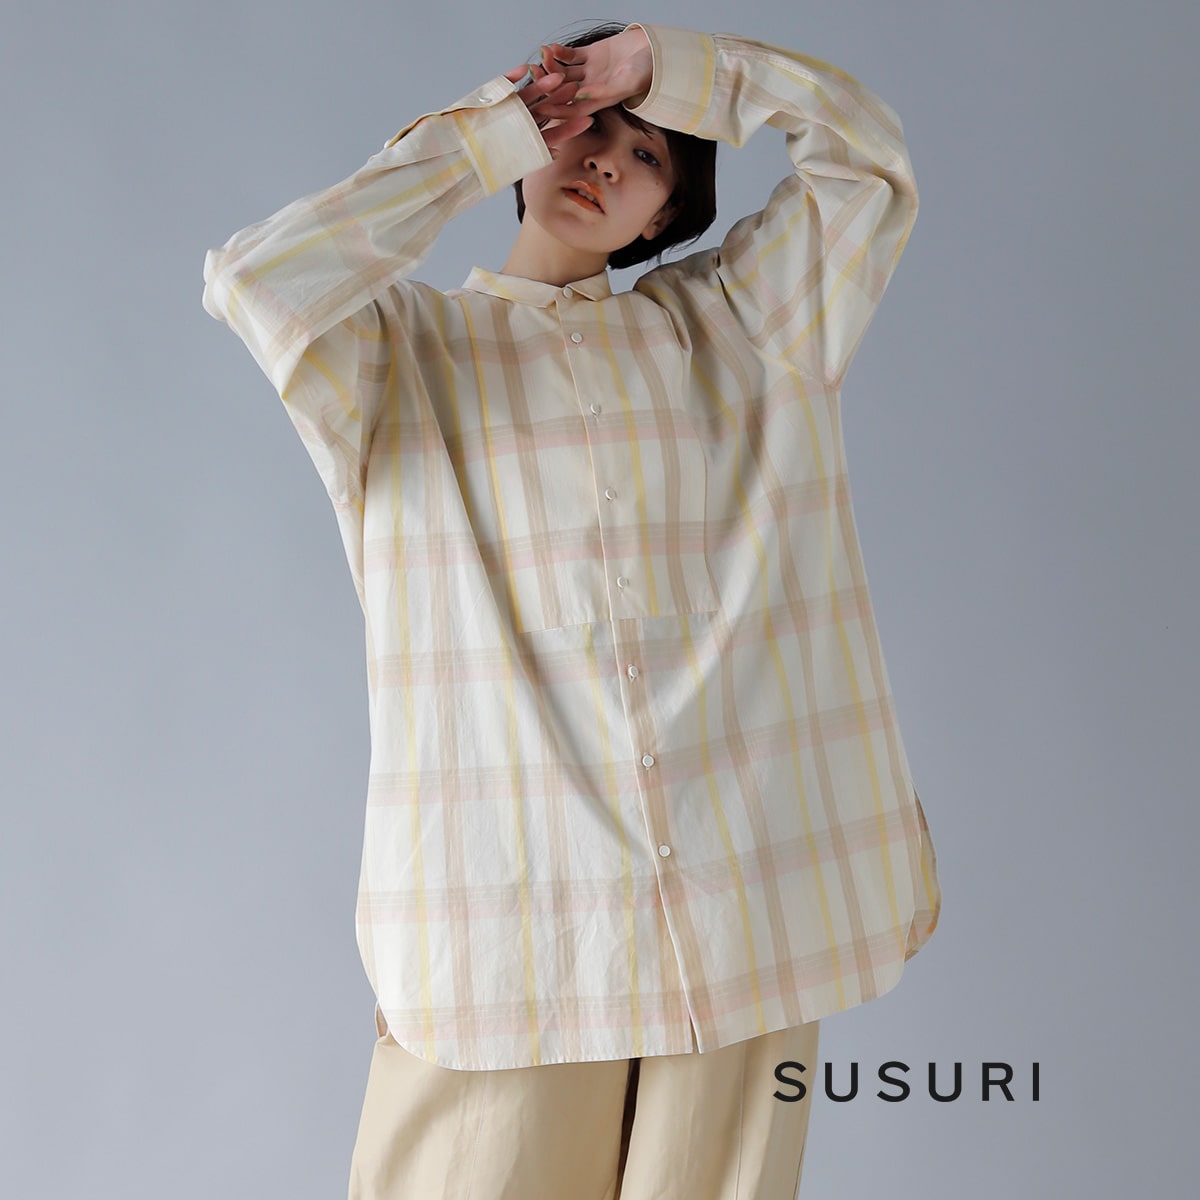 susuri(ススリ)コットンチェックアプライシャツ 21-303